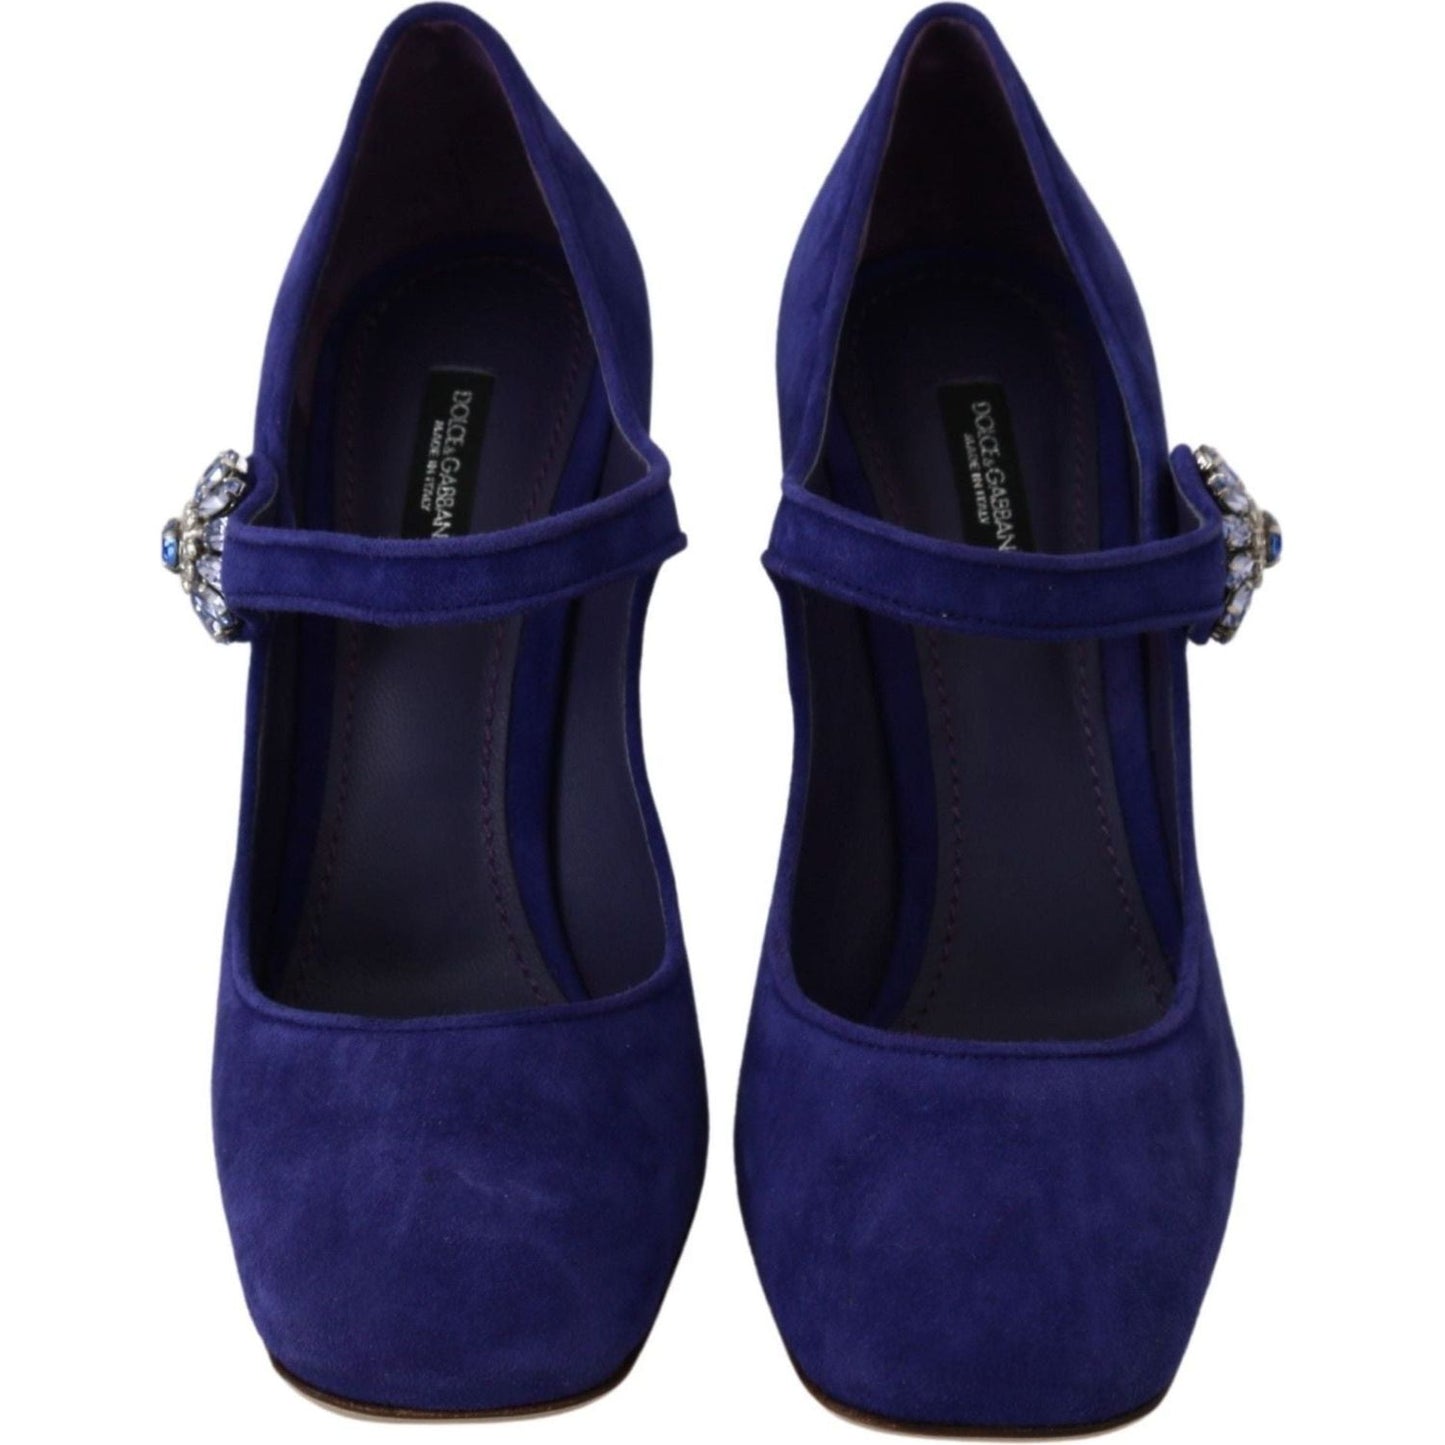 Dolce & Gabbana Elegant Purple Suede Mary Janes Pumps purple-suede-crystal-pumps-heels-shoes IMG_1741-e1649738-069.jpg